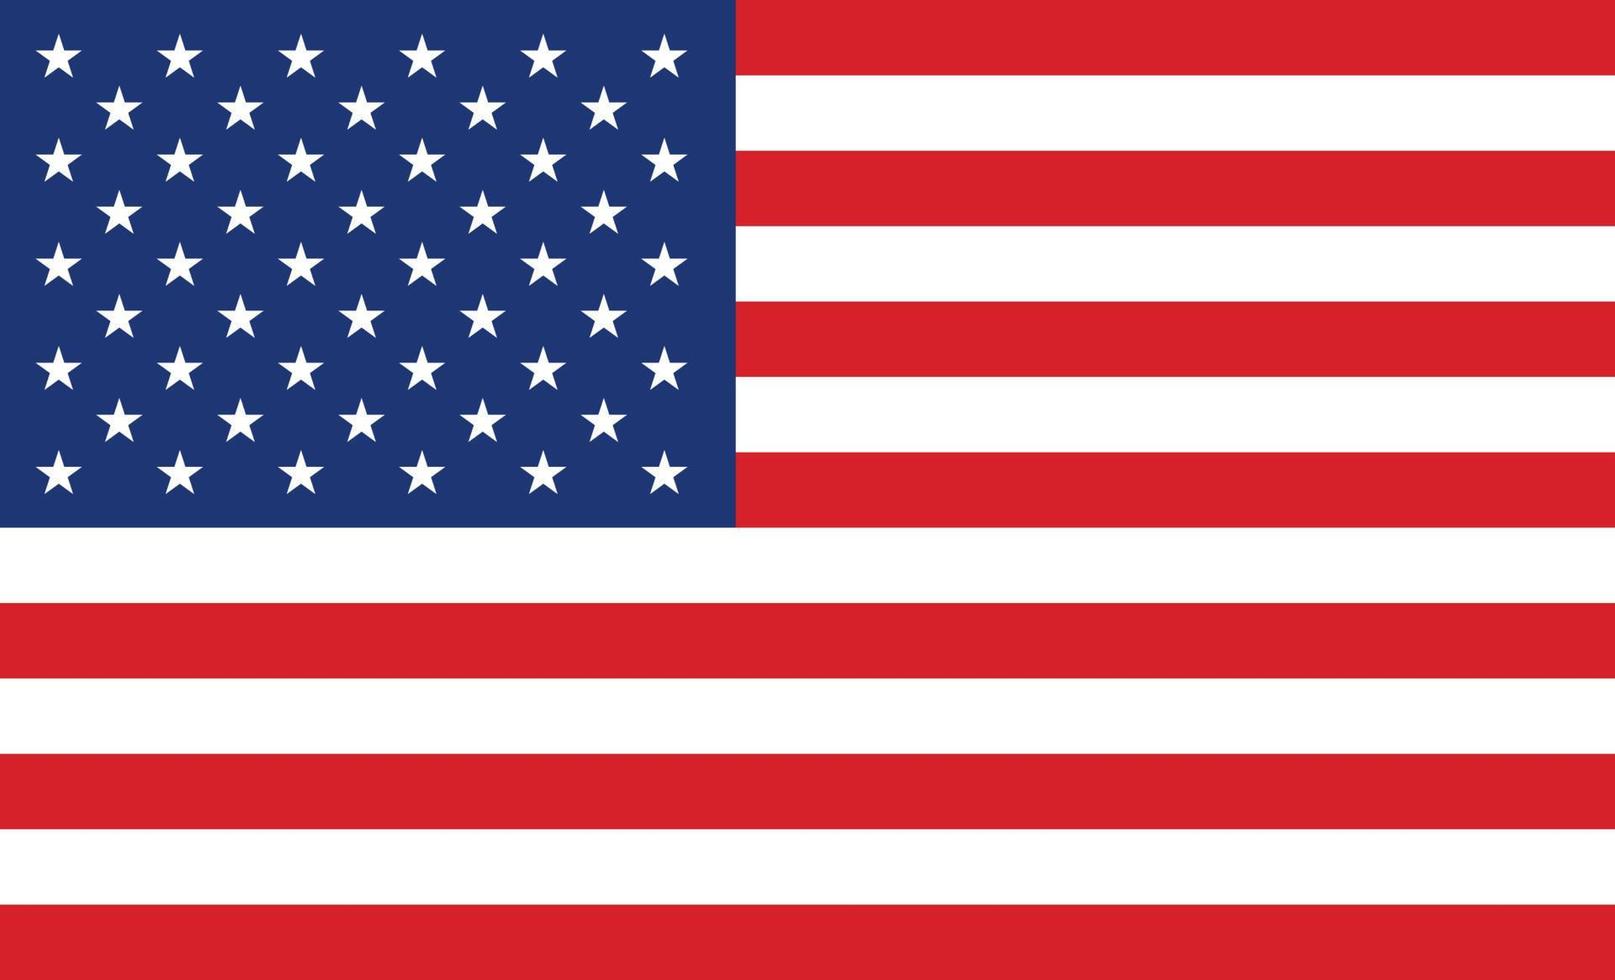 amerikansk flagga vektorillustration vektor